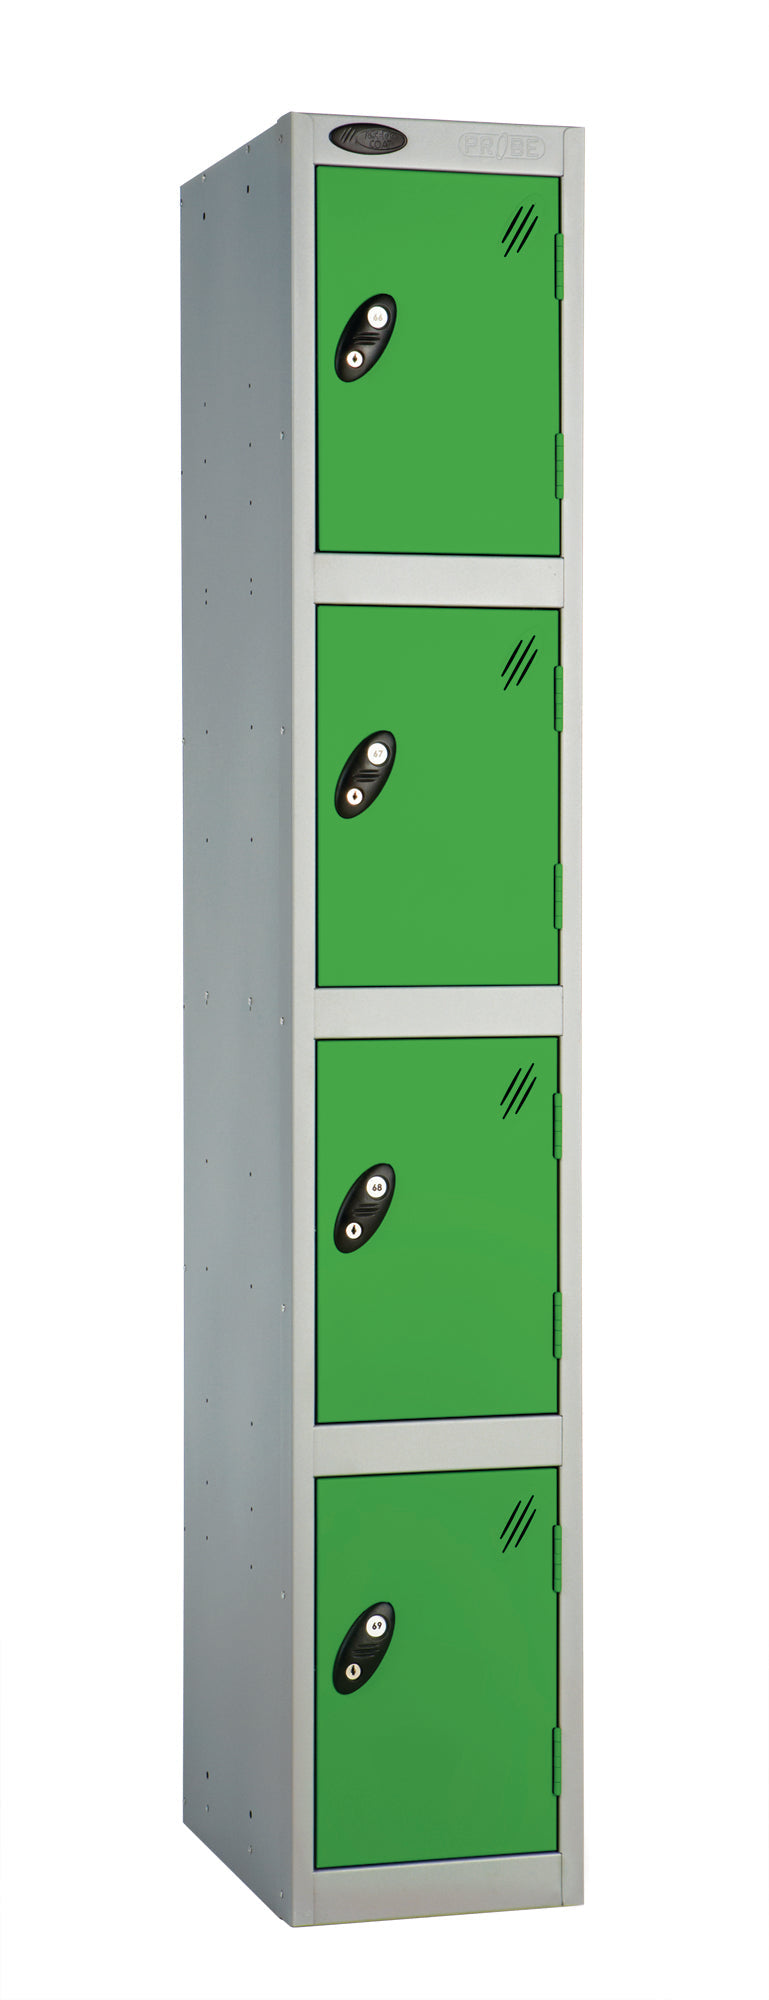 PROBEBOX STANDARD 1 NEST STEEL LOCKERS - FOREST GREEN 4 DOOR Storage Lockers > Lockers > Cabinets > Storage > Probe > One Stop For Safety   